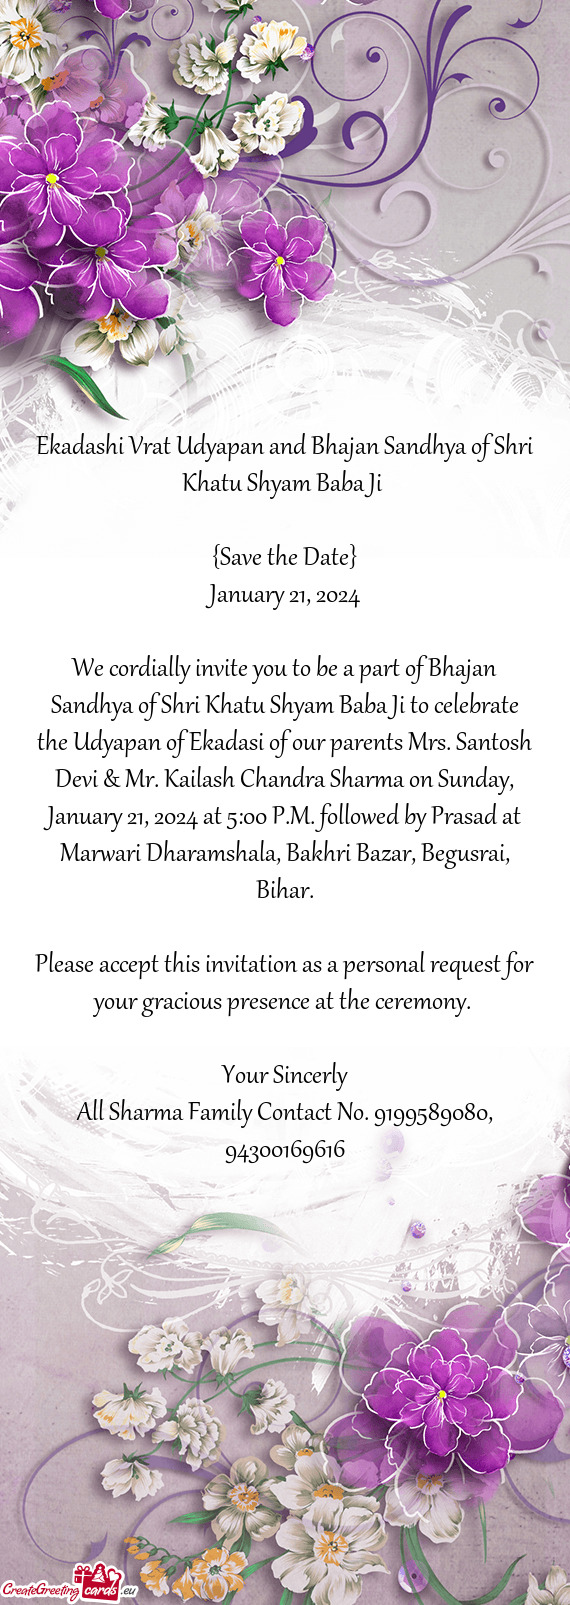 Udyapan of Ekadasi of our parents Mrs. Santosh Devi & Mr. Kailash Chandra Sharma on Sunday, January